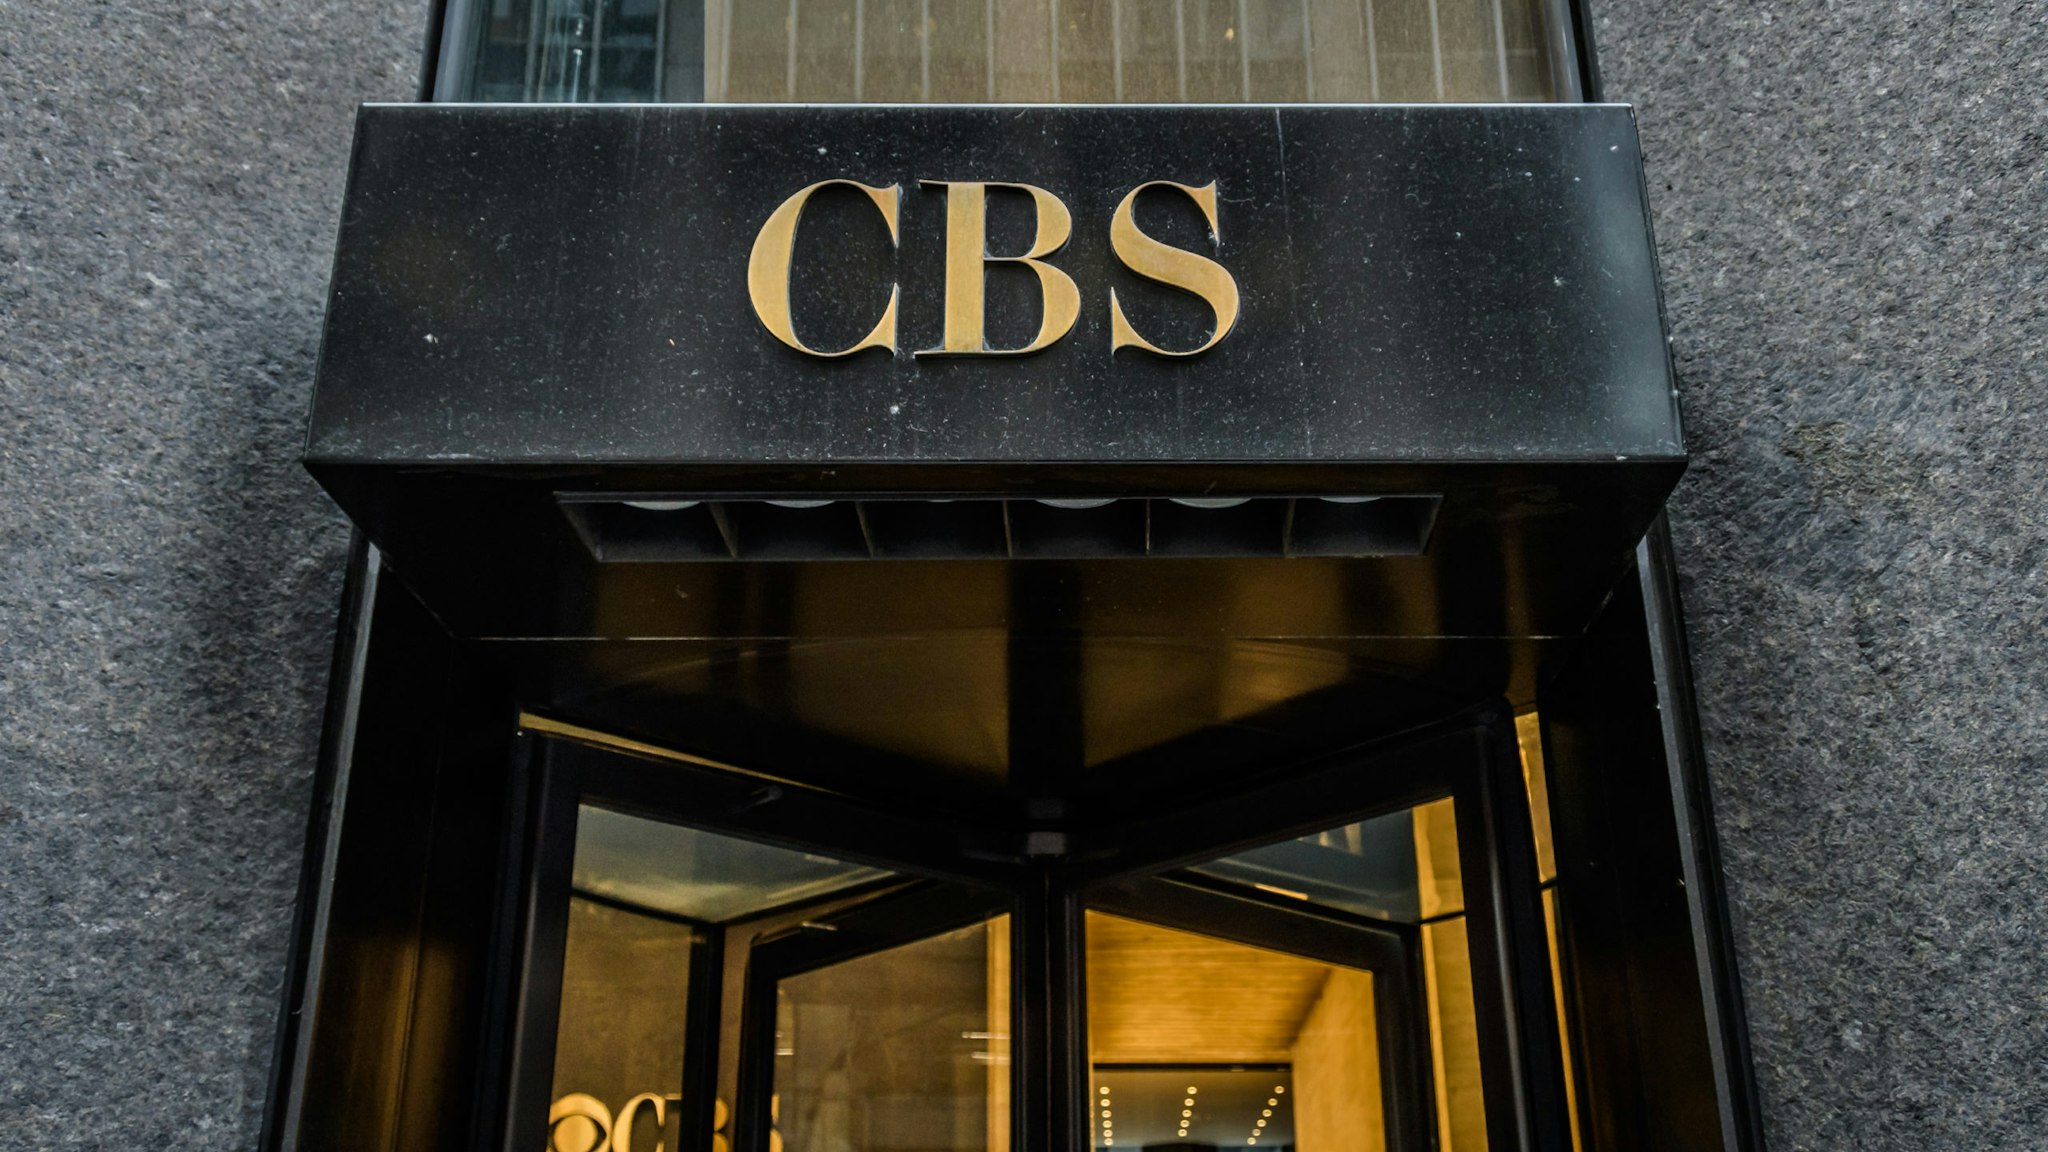 MANHATTAN, NEW YORK, UNITED STATES - 2020/01/10: Main entrance to CBS (Columbia Broadcasting Syetem) headquarters in New York City. (Photo by Erik McGregor/LightRocket via Getty Images)